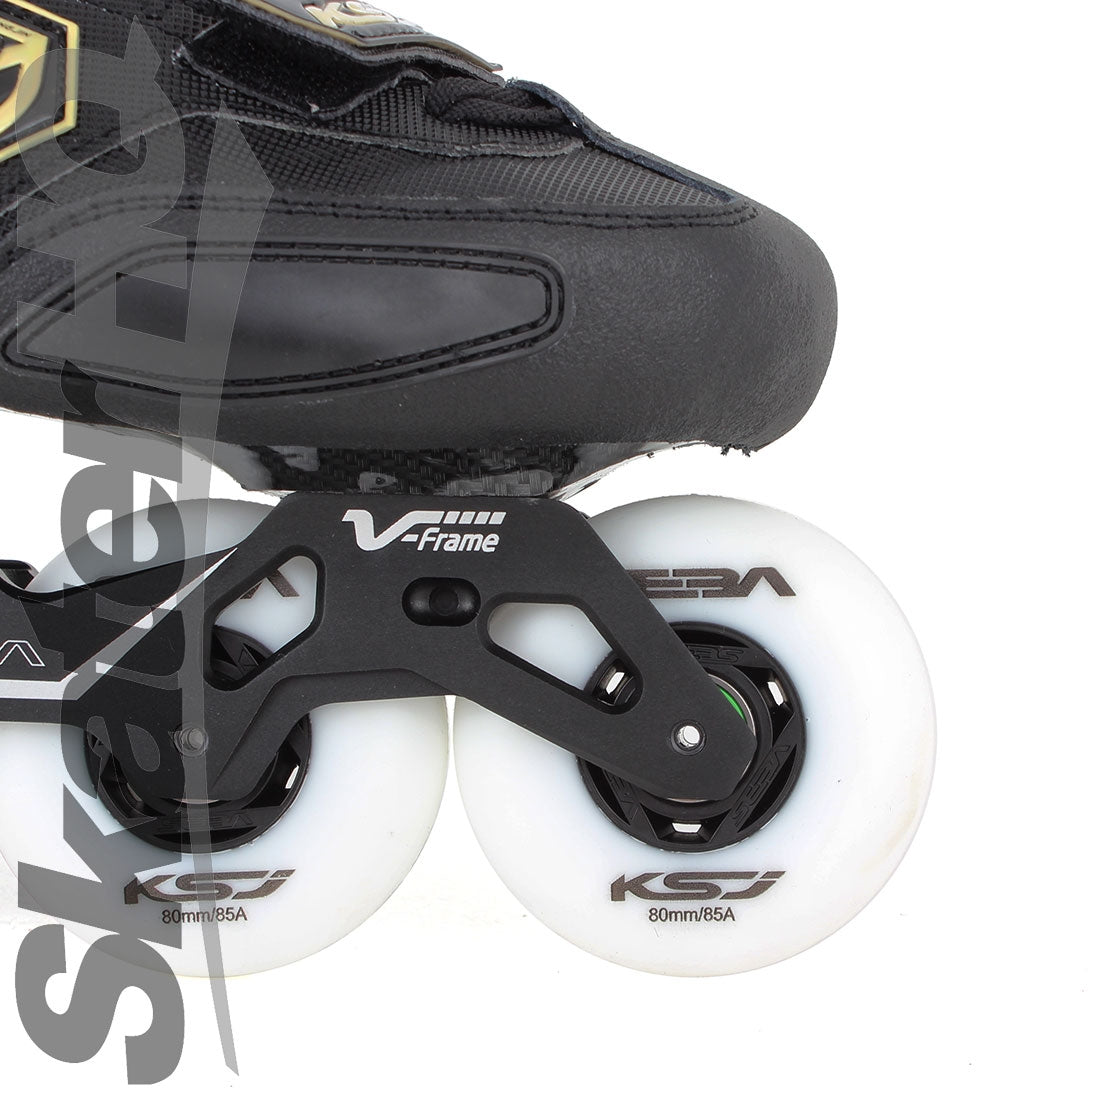 SEBA KSJ 2 Black 8US/ EU41 Inline Rec Skates